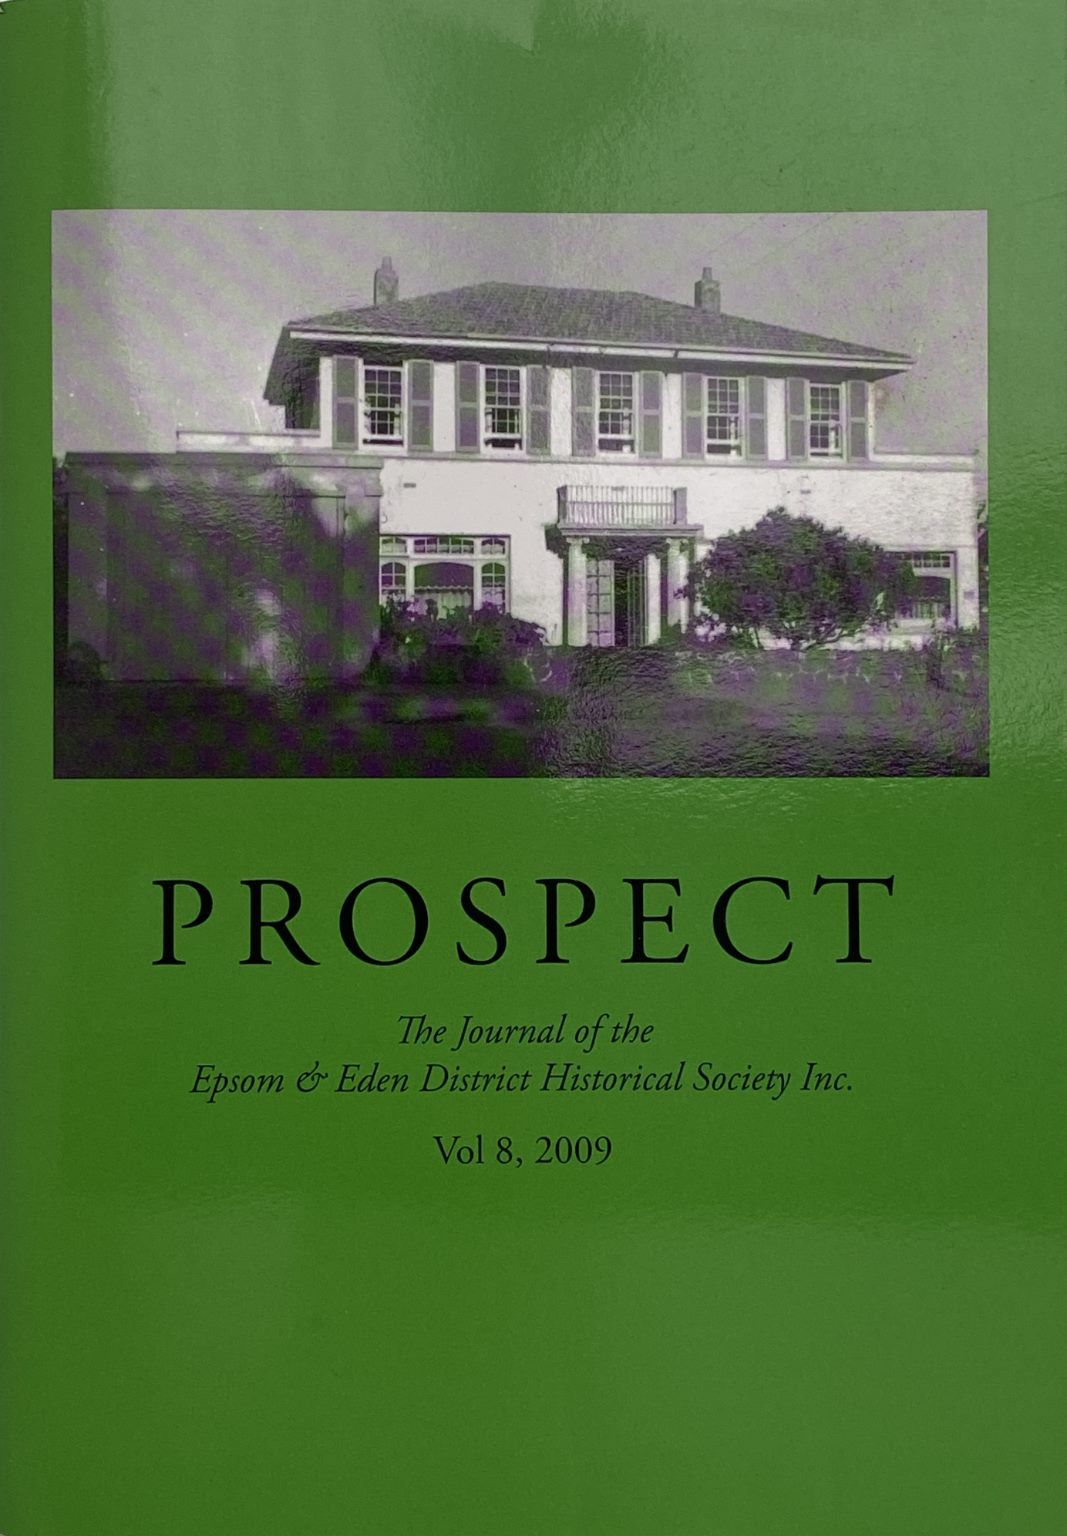 PROSPECT: Journal of the Epsom & Eden District Historical Society - Vol 8, 2009